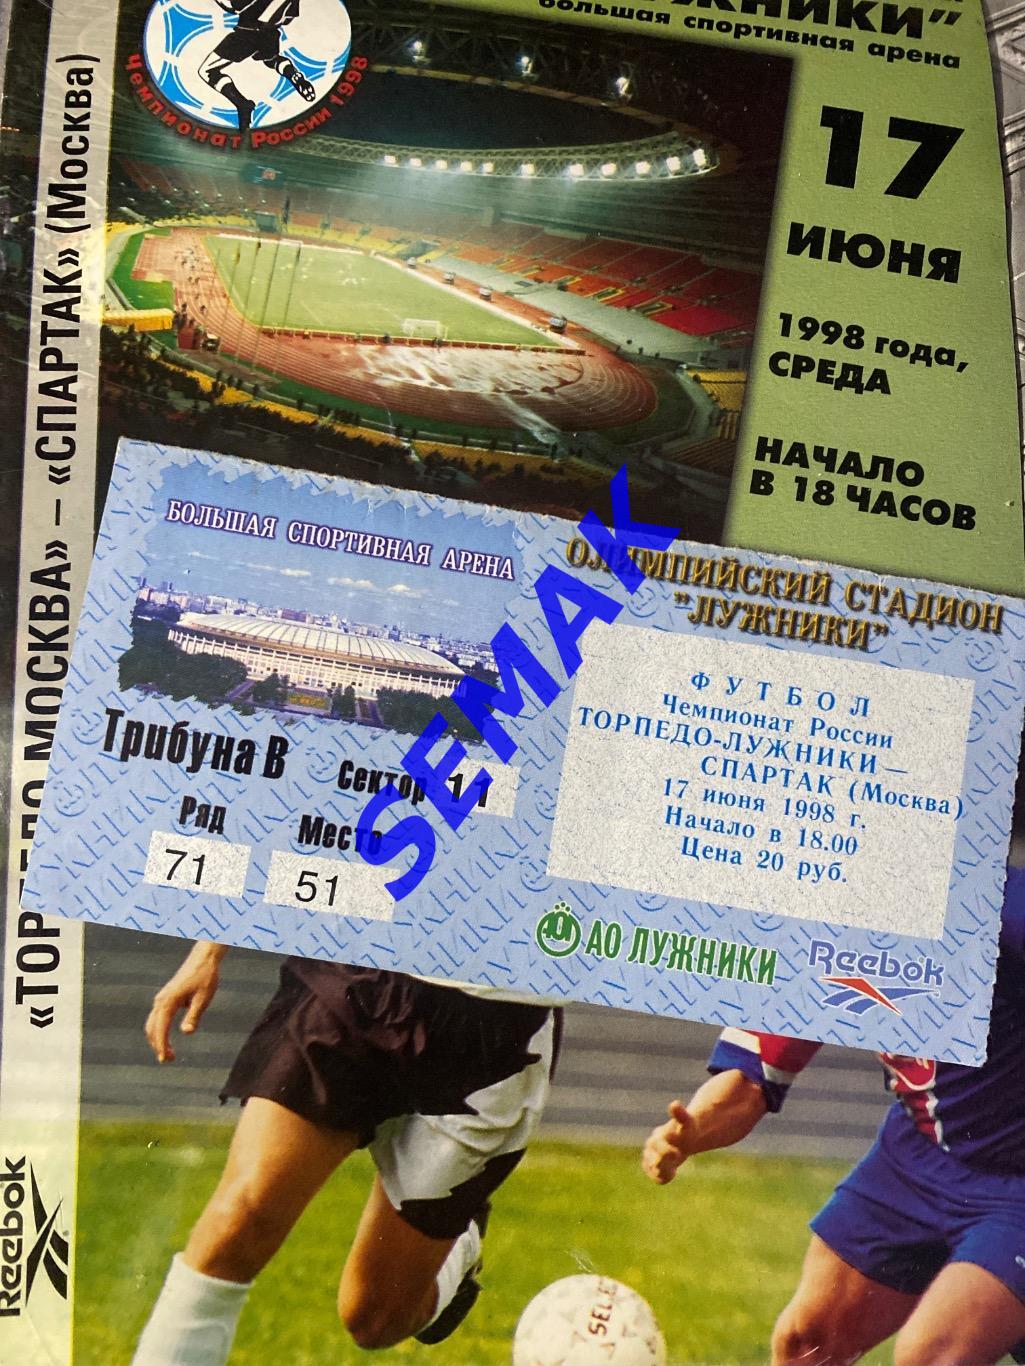 Торпедо-Лужники Москва - Спартак Москва - 17.06.1998. Билет футбол 2